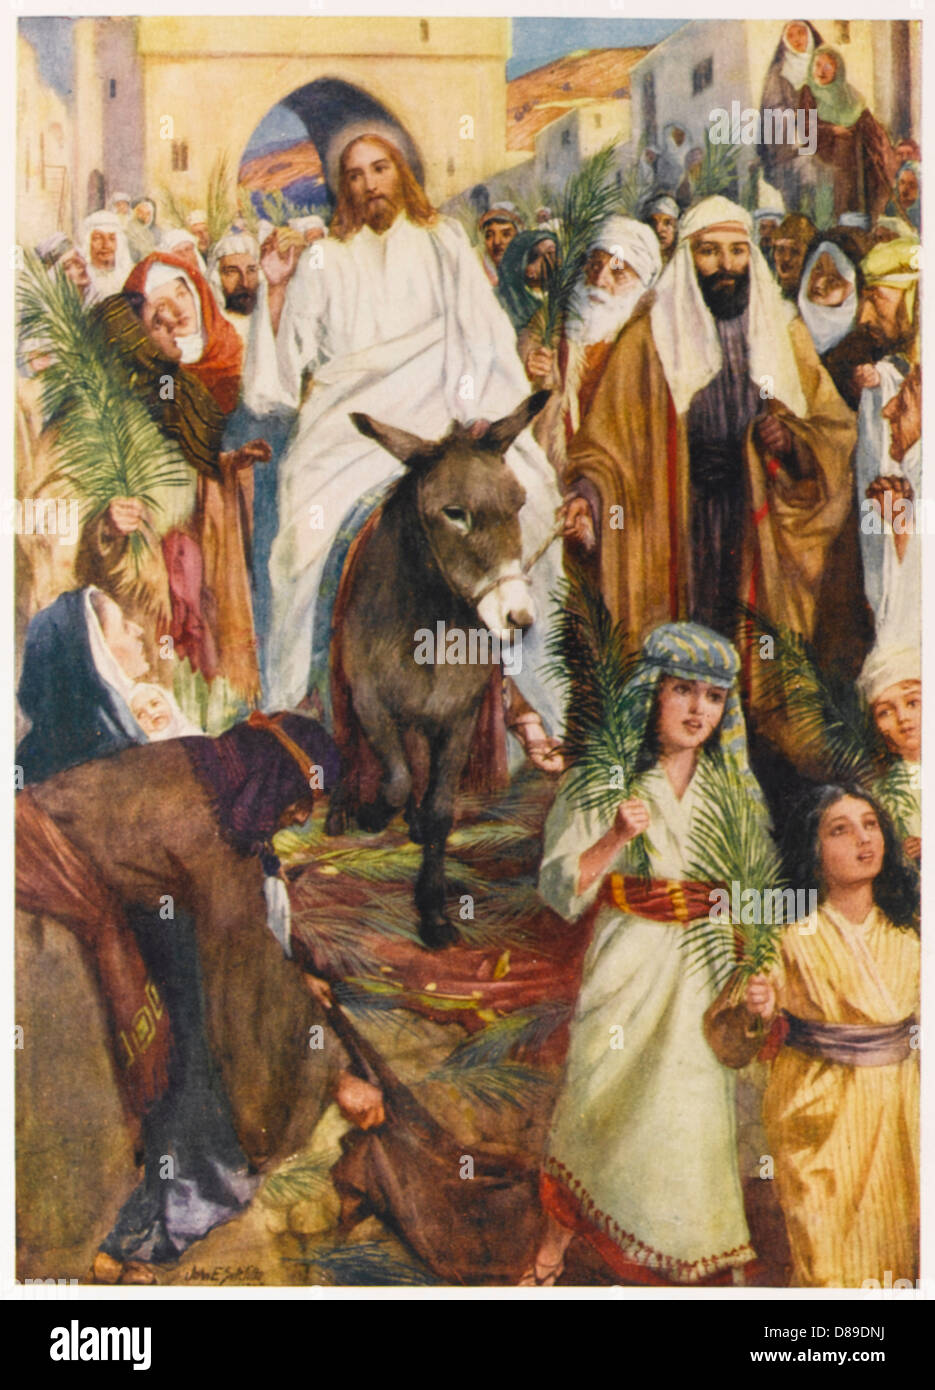 Jesus riding donkey hi-res stock photography and images - Alamy